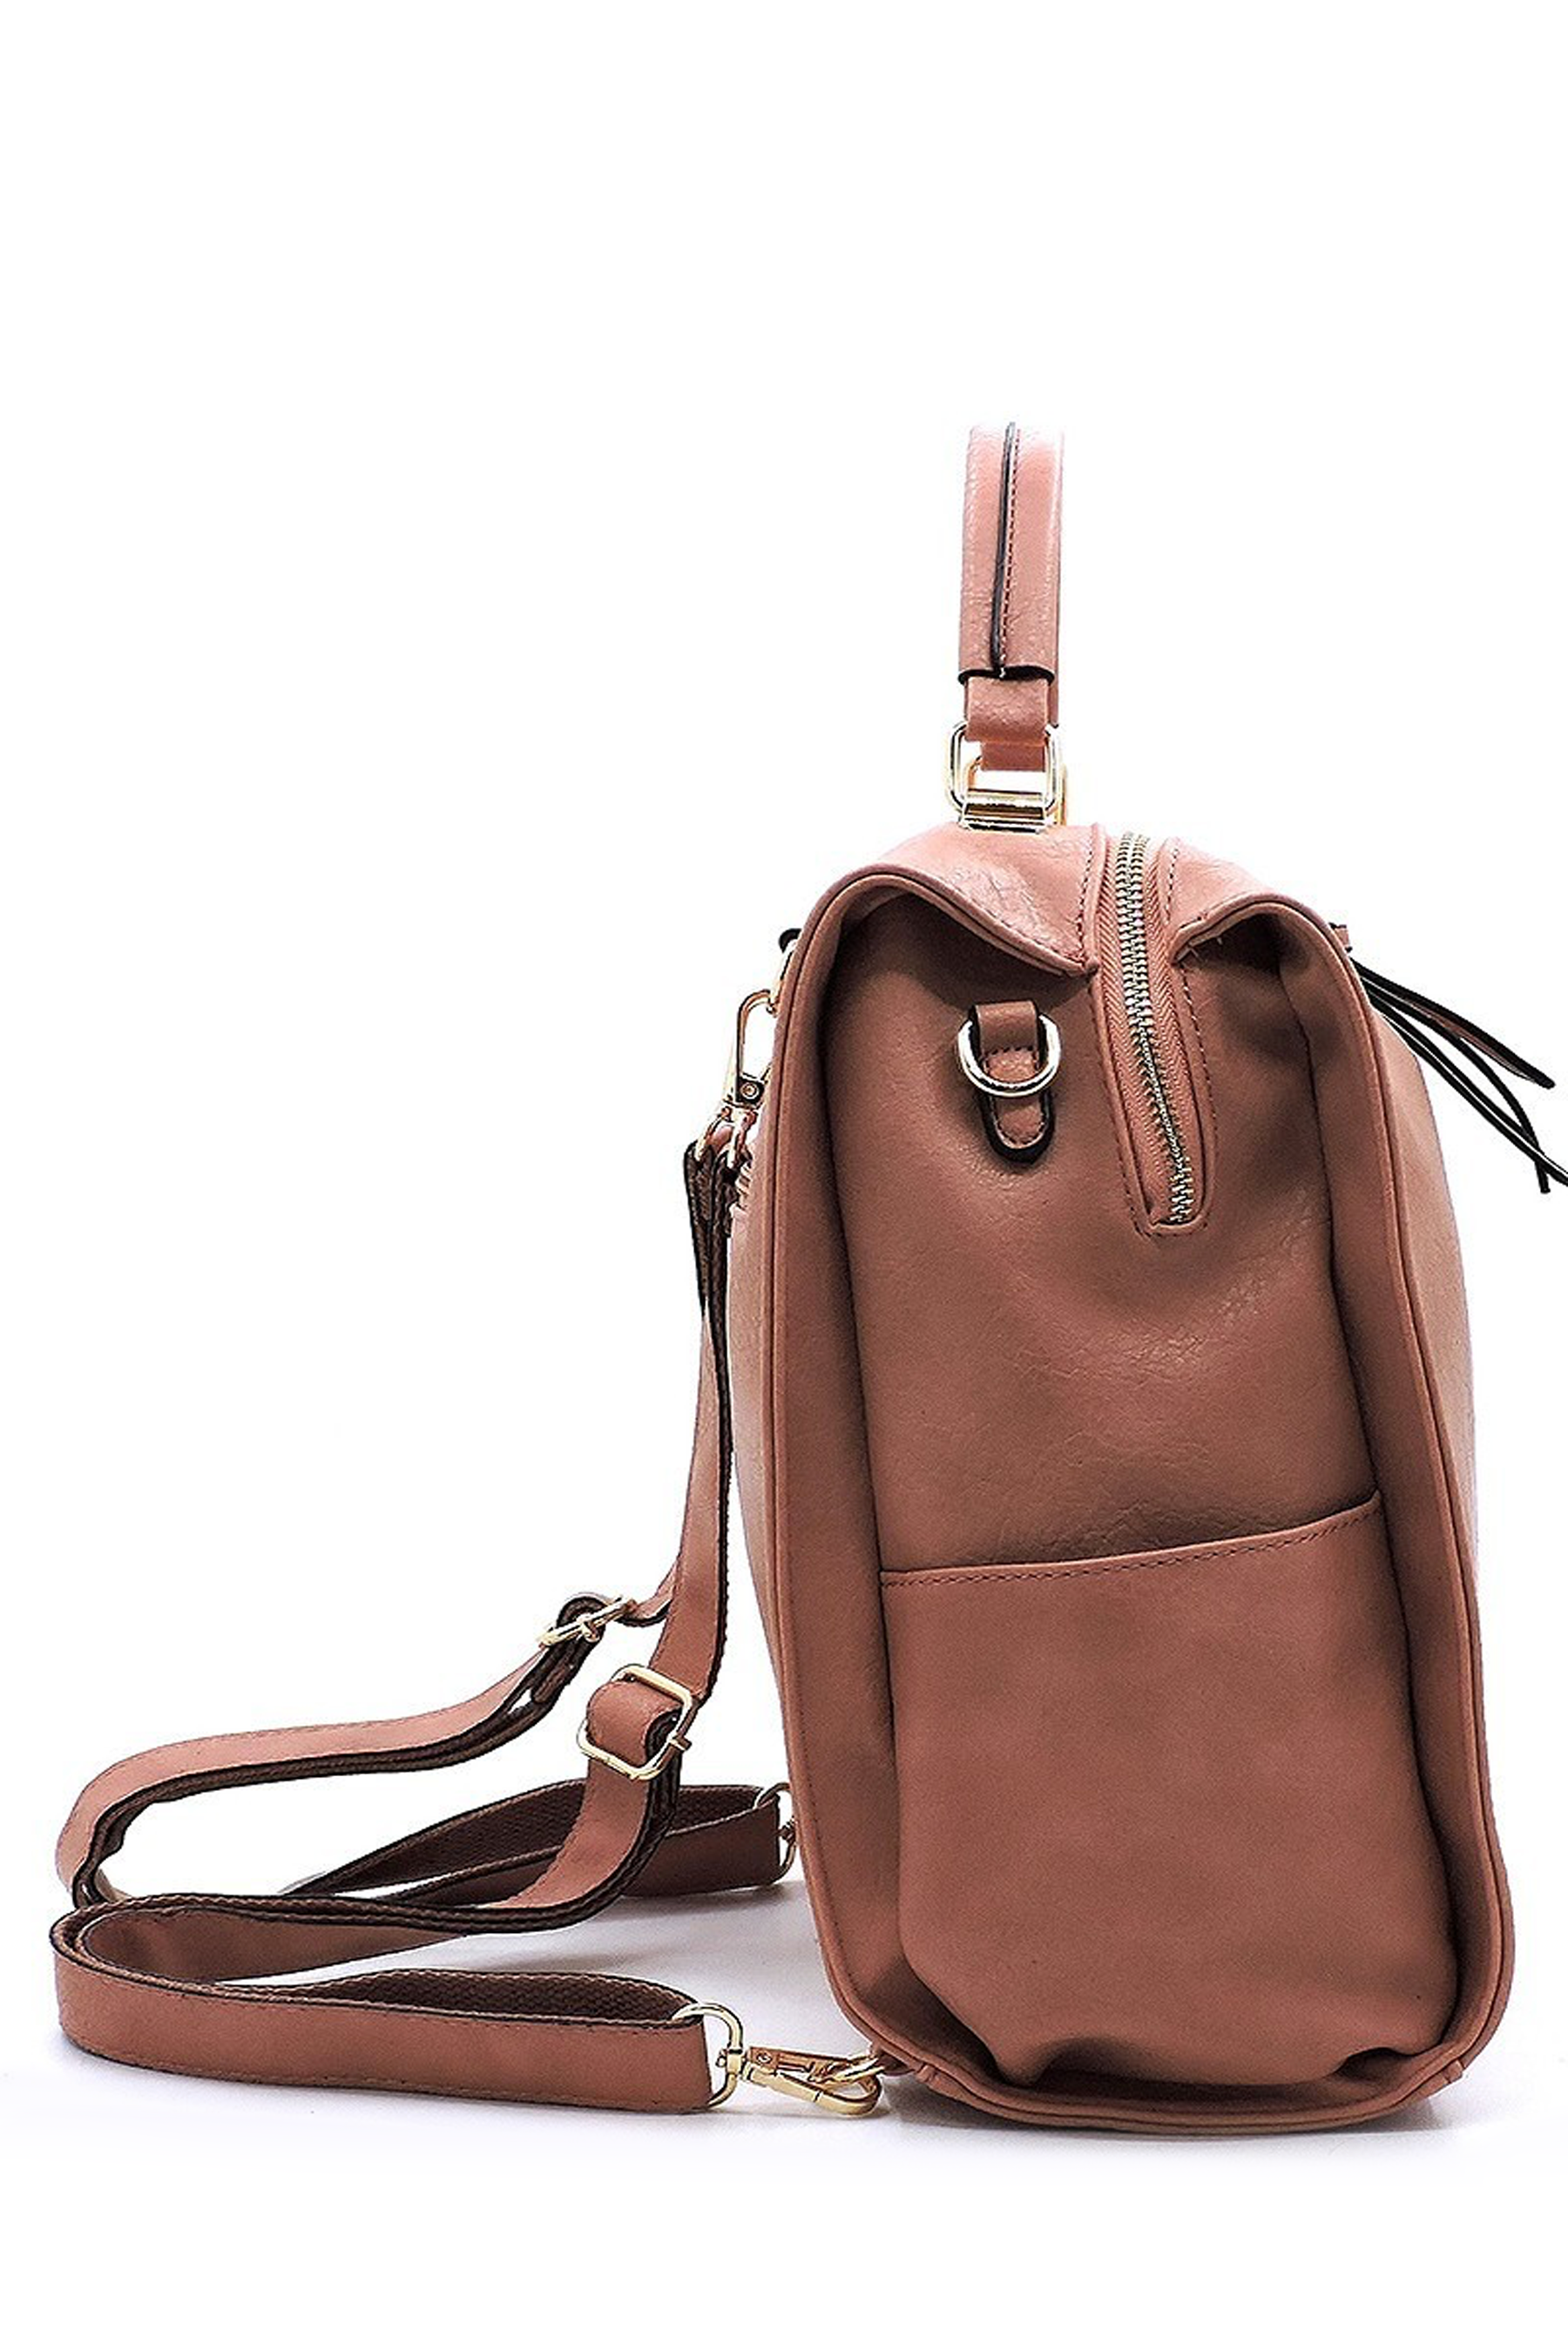 Khaki Retro Vegan Leather School Convertible Backpack Message Bags |  Baginning